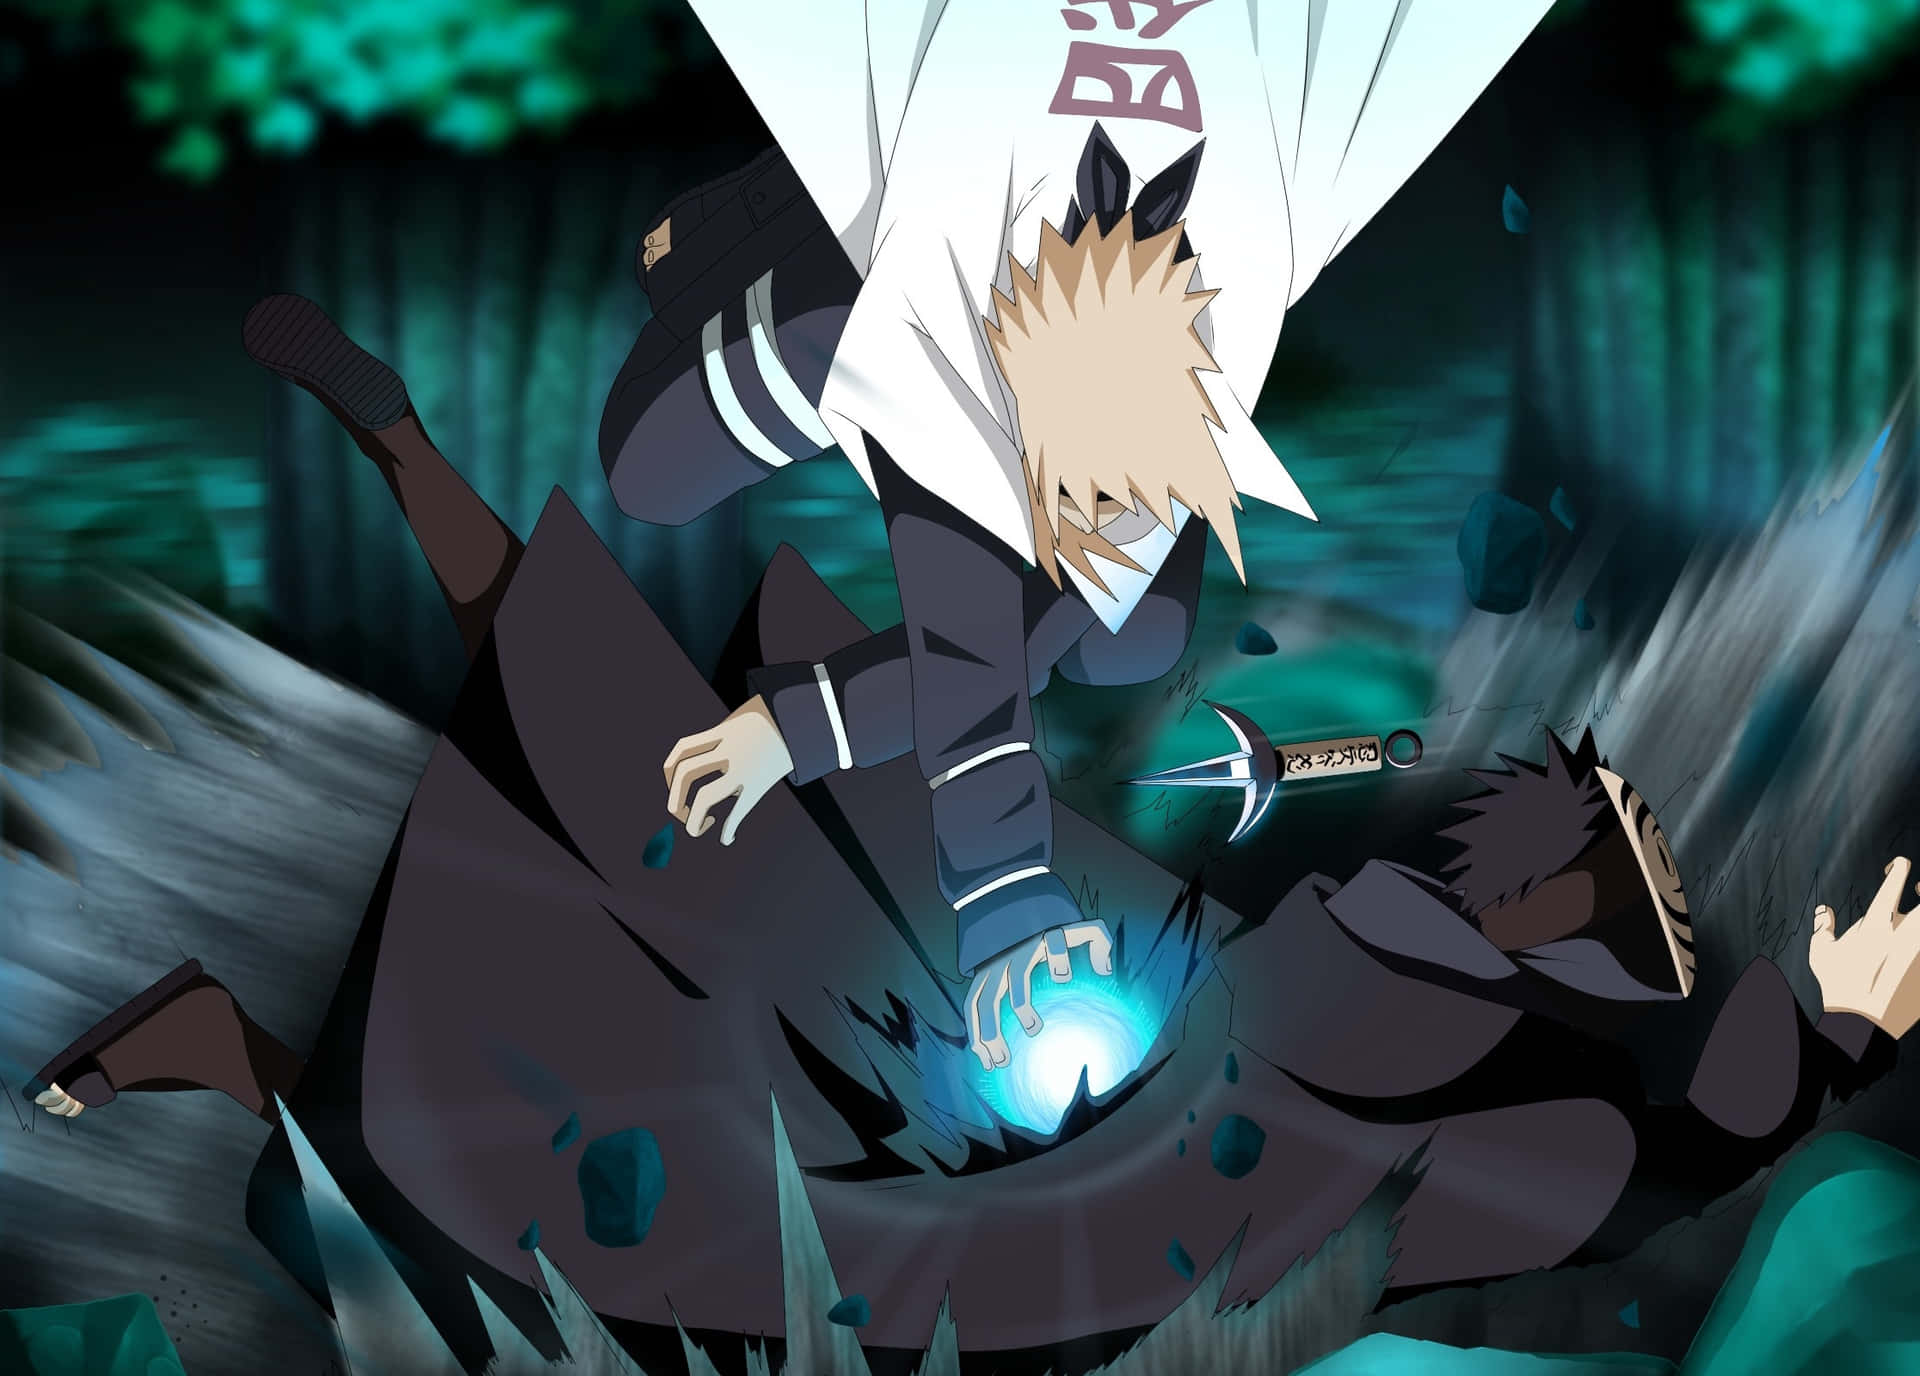 Naruto sender Rasengan, en signatur jutsu af Uzumaki familien. Wallpaper